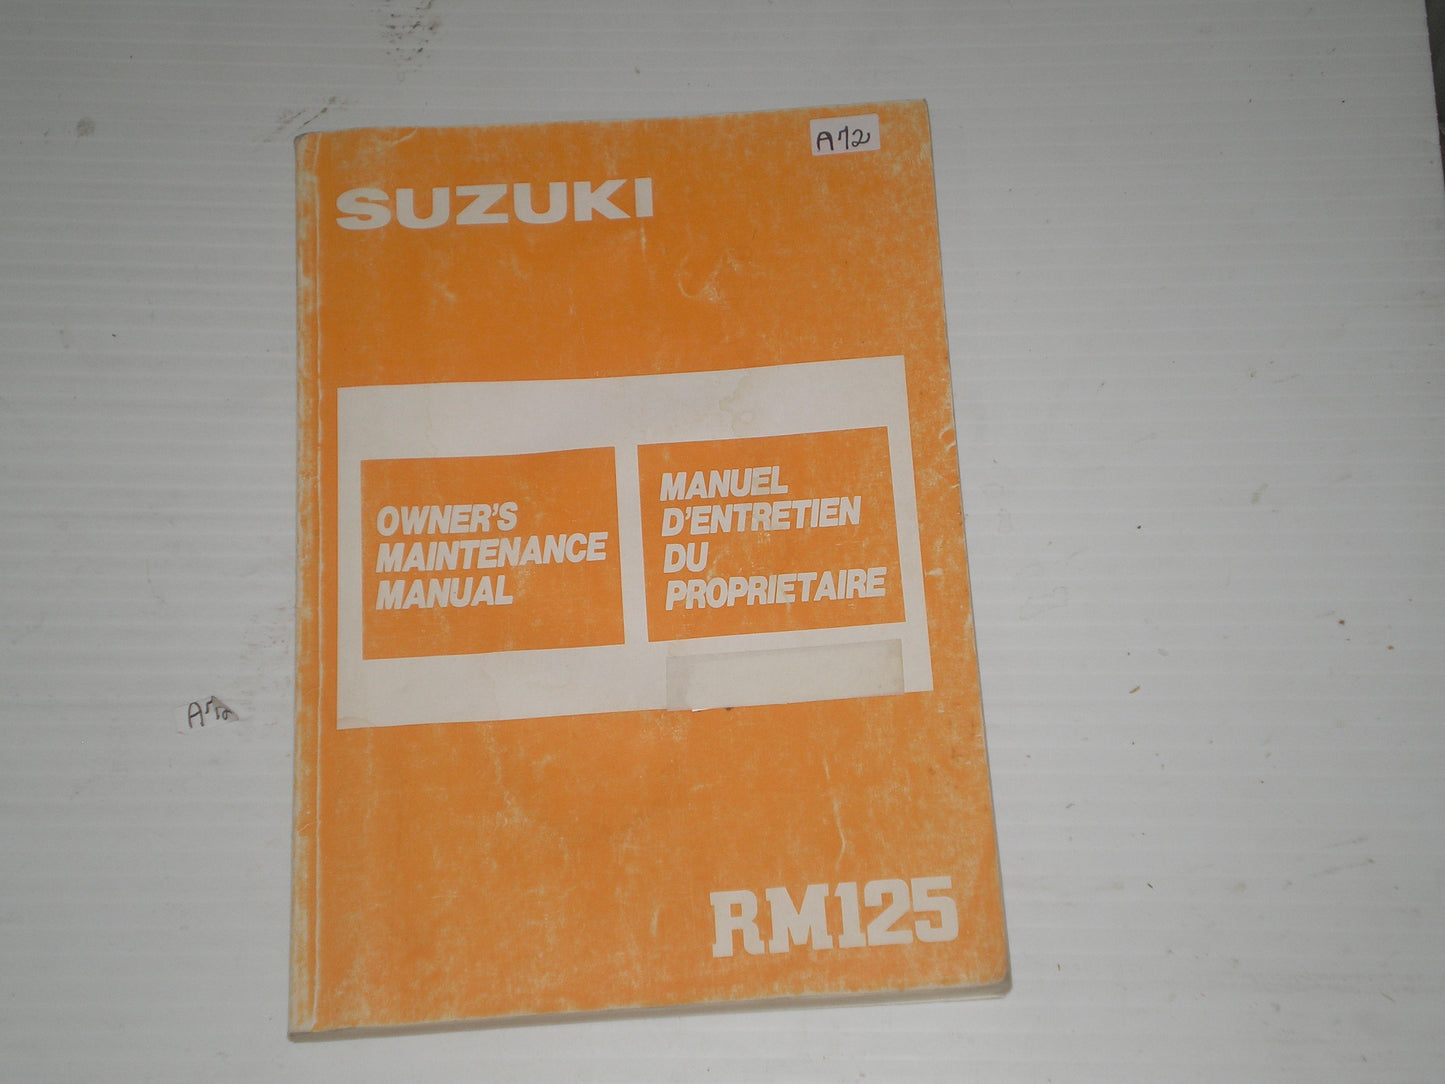 SUZUKI RM125 H 1987  Owner's Maintenance Manual  99011-01B21-01B  #A72